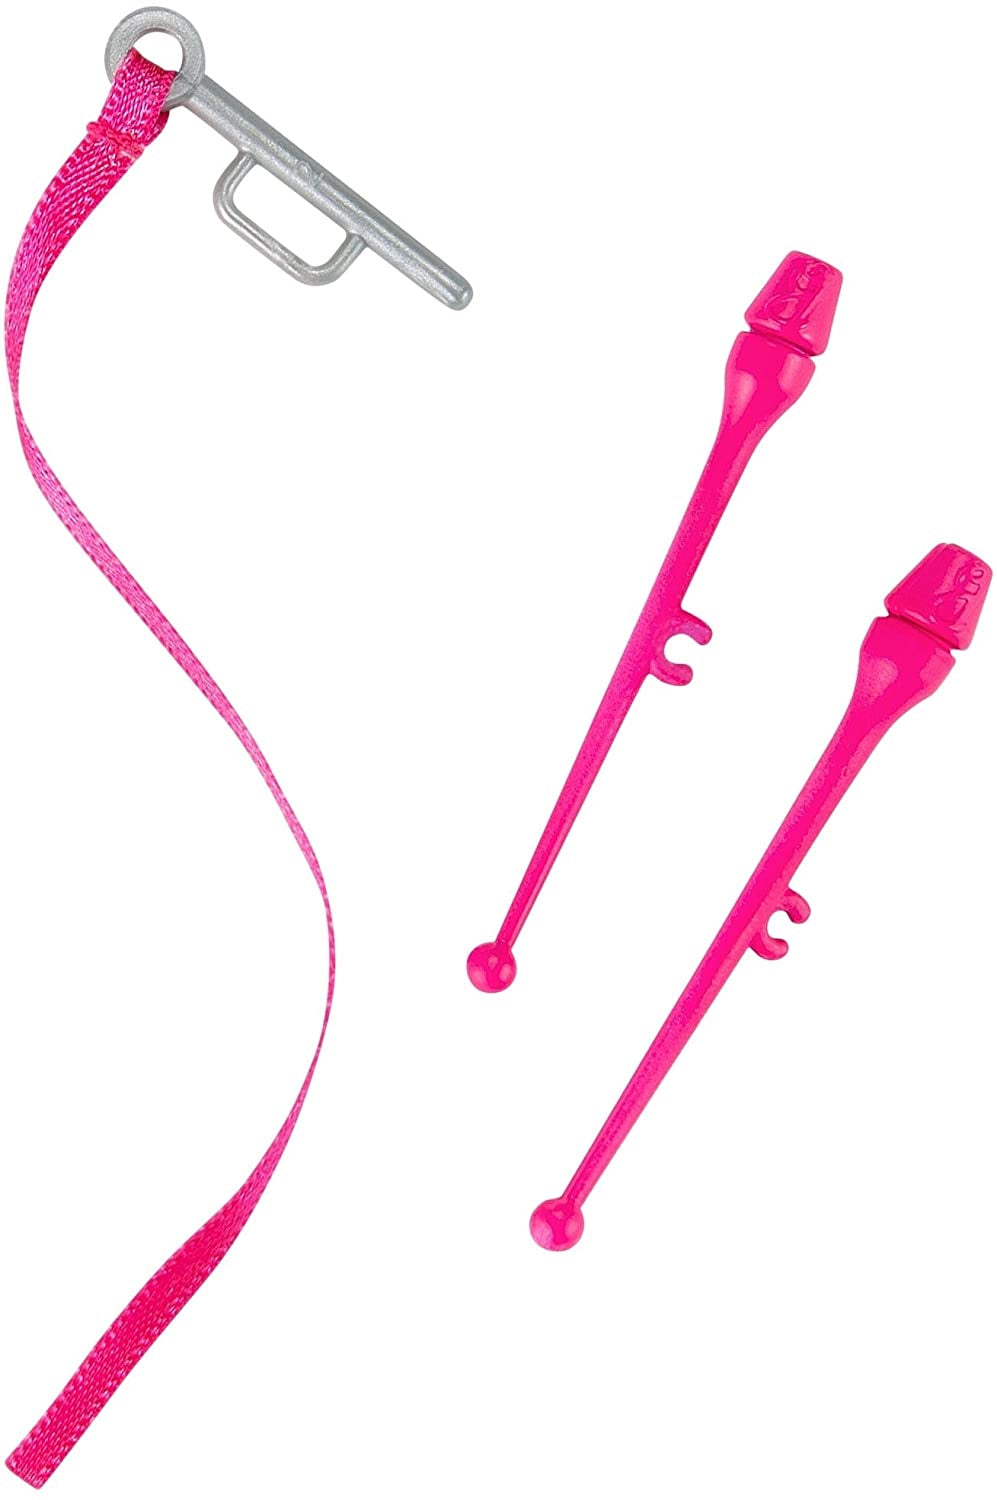 Barbie Rhythmic Gymnast with Colorful Metallic Leotard, 2 Batons & Ribbon Accessory